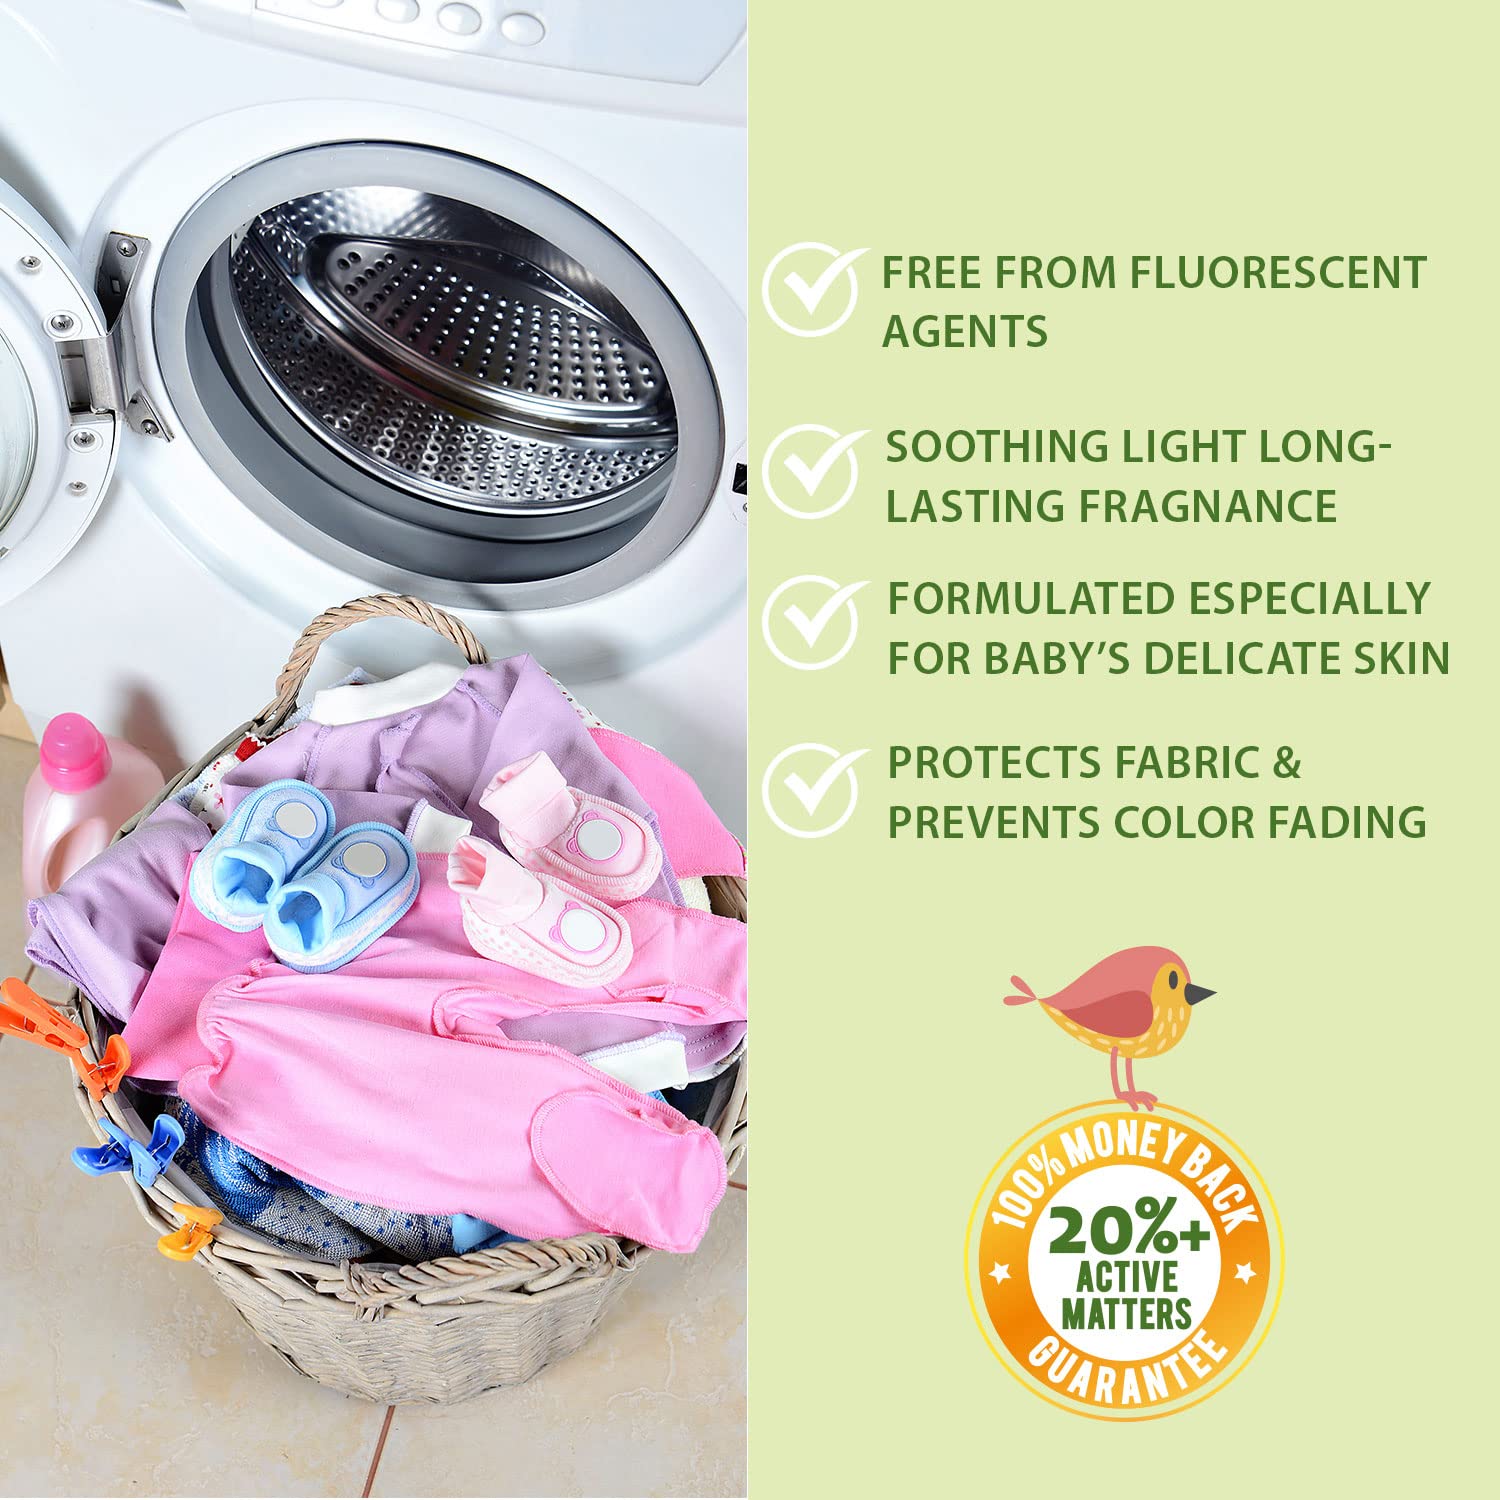 WBM Care Liquid Baby Laundry Detergent, 100 Loads-68 OZ